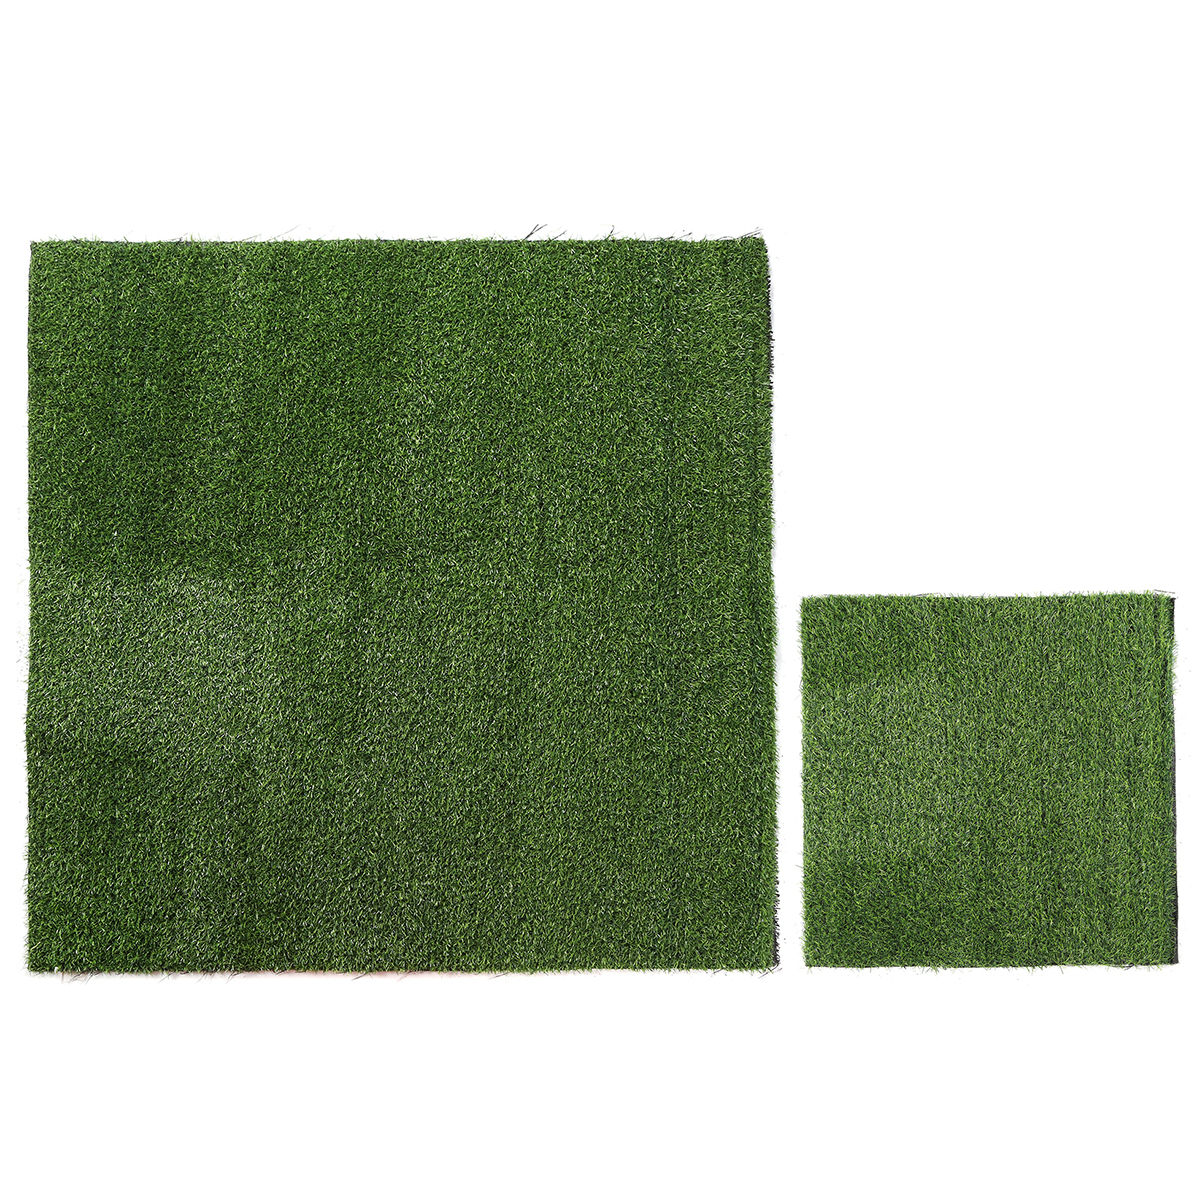 Artificial-Grass-Lawn-Turf-Encryption-Synthetic-Plastic-Plant-Garden-Decor-1709158-2